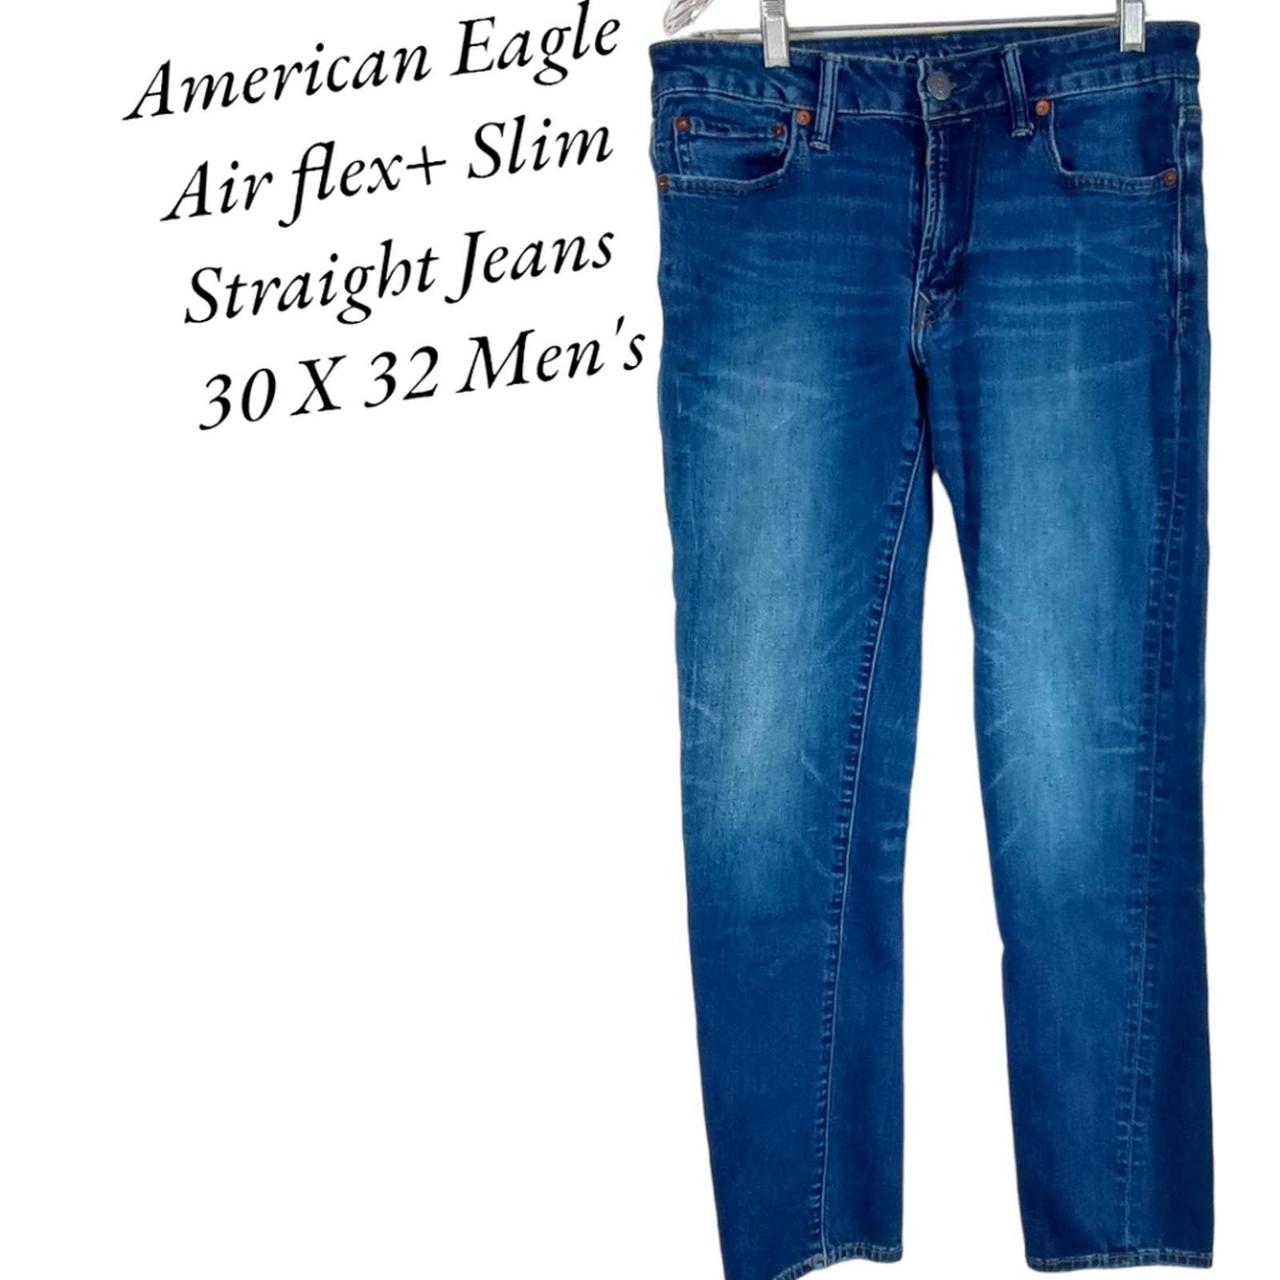 AE AirFlex+ Slim Jean